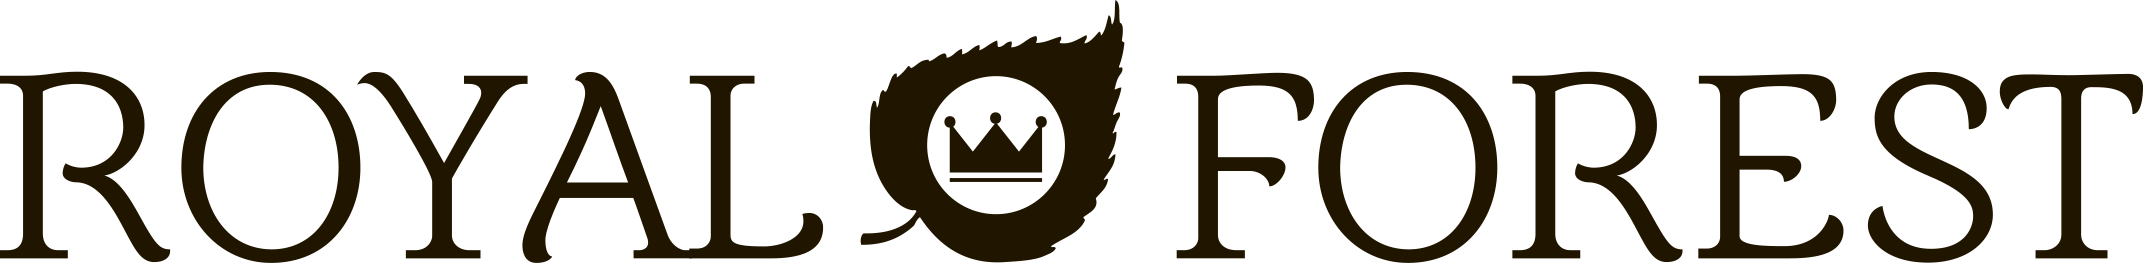 Royal страна производитель. Роял Форест. Royal Forest logo. The Forest логотип. Royal.